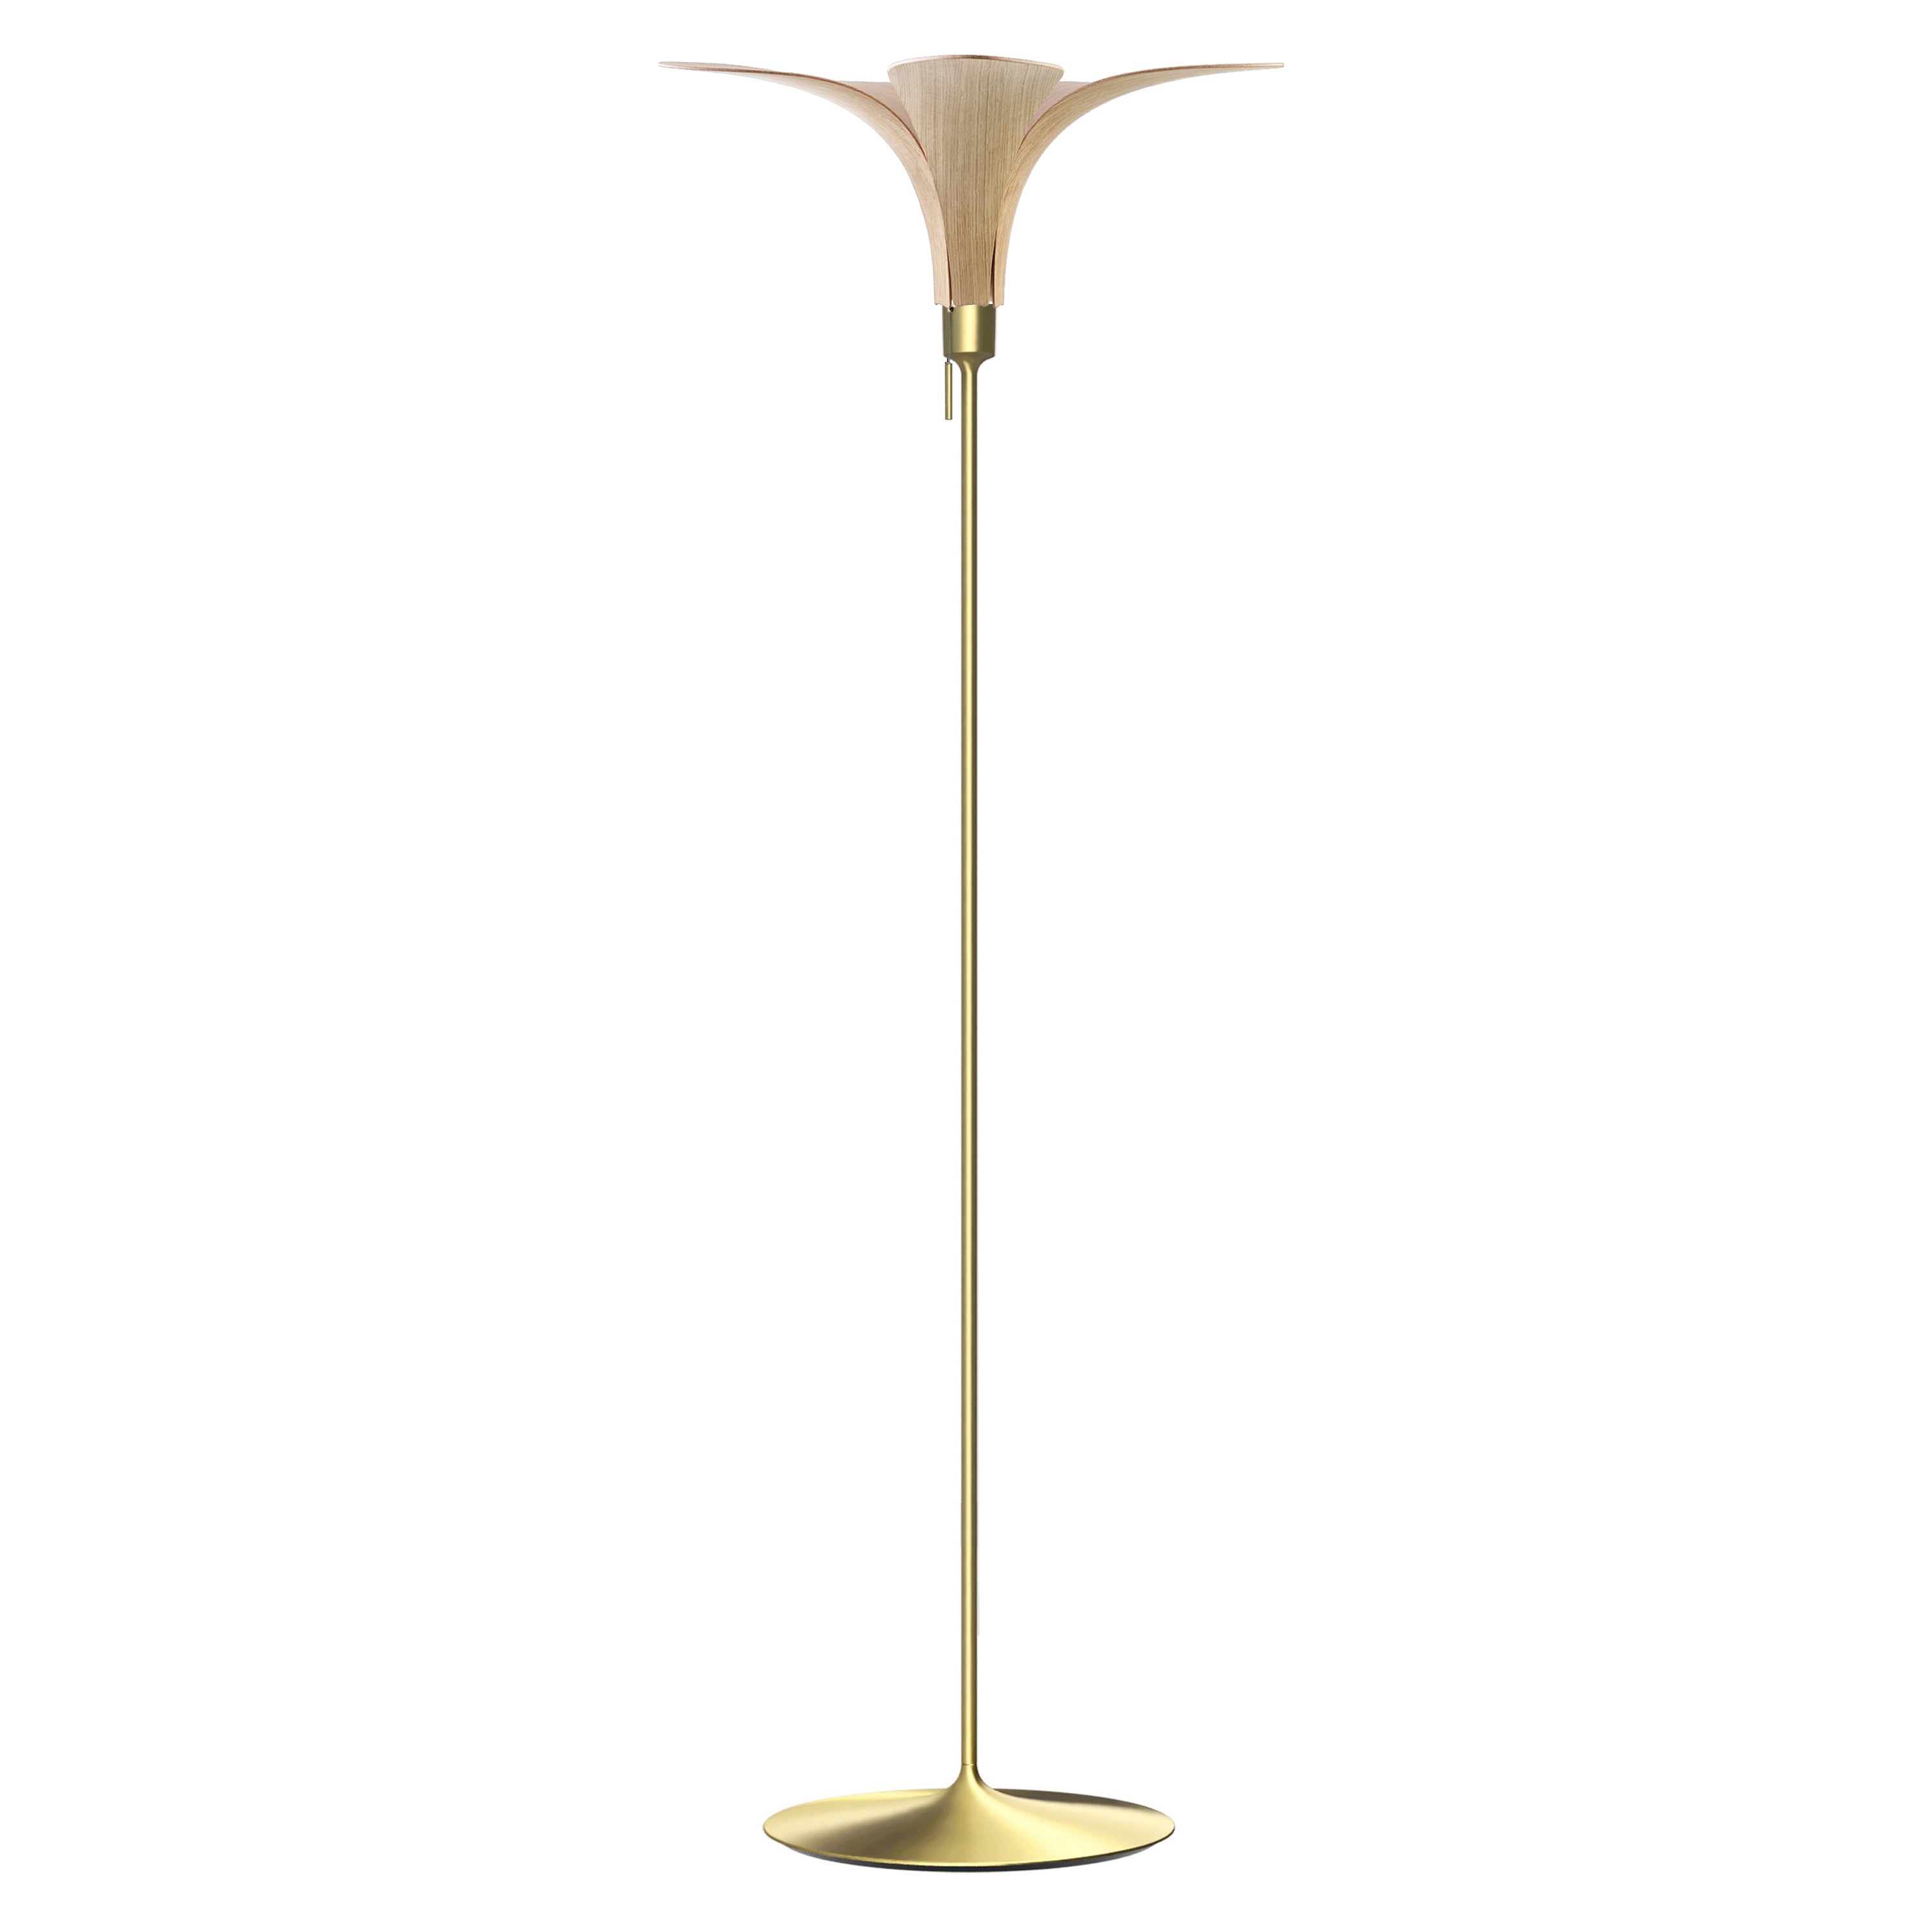 Jazz Champagne Floor Lamp: Oak + Brushed Brass